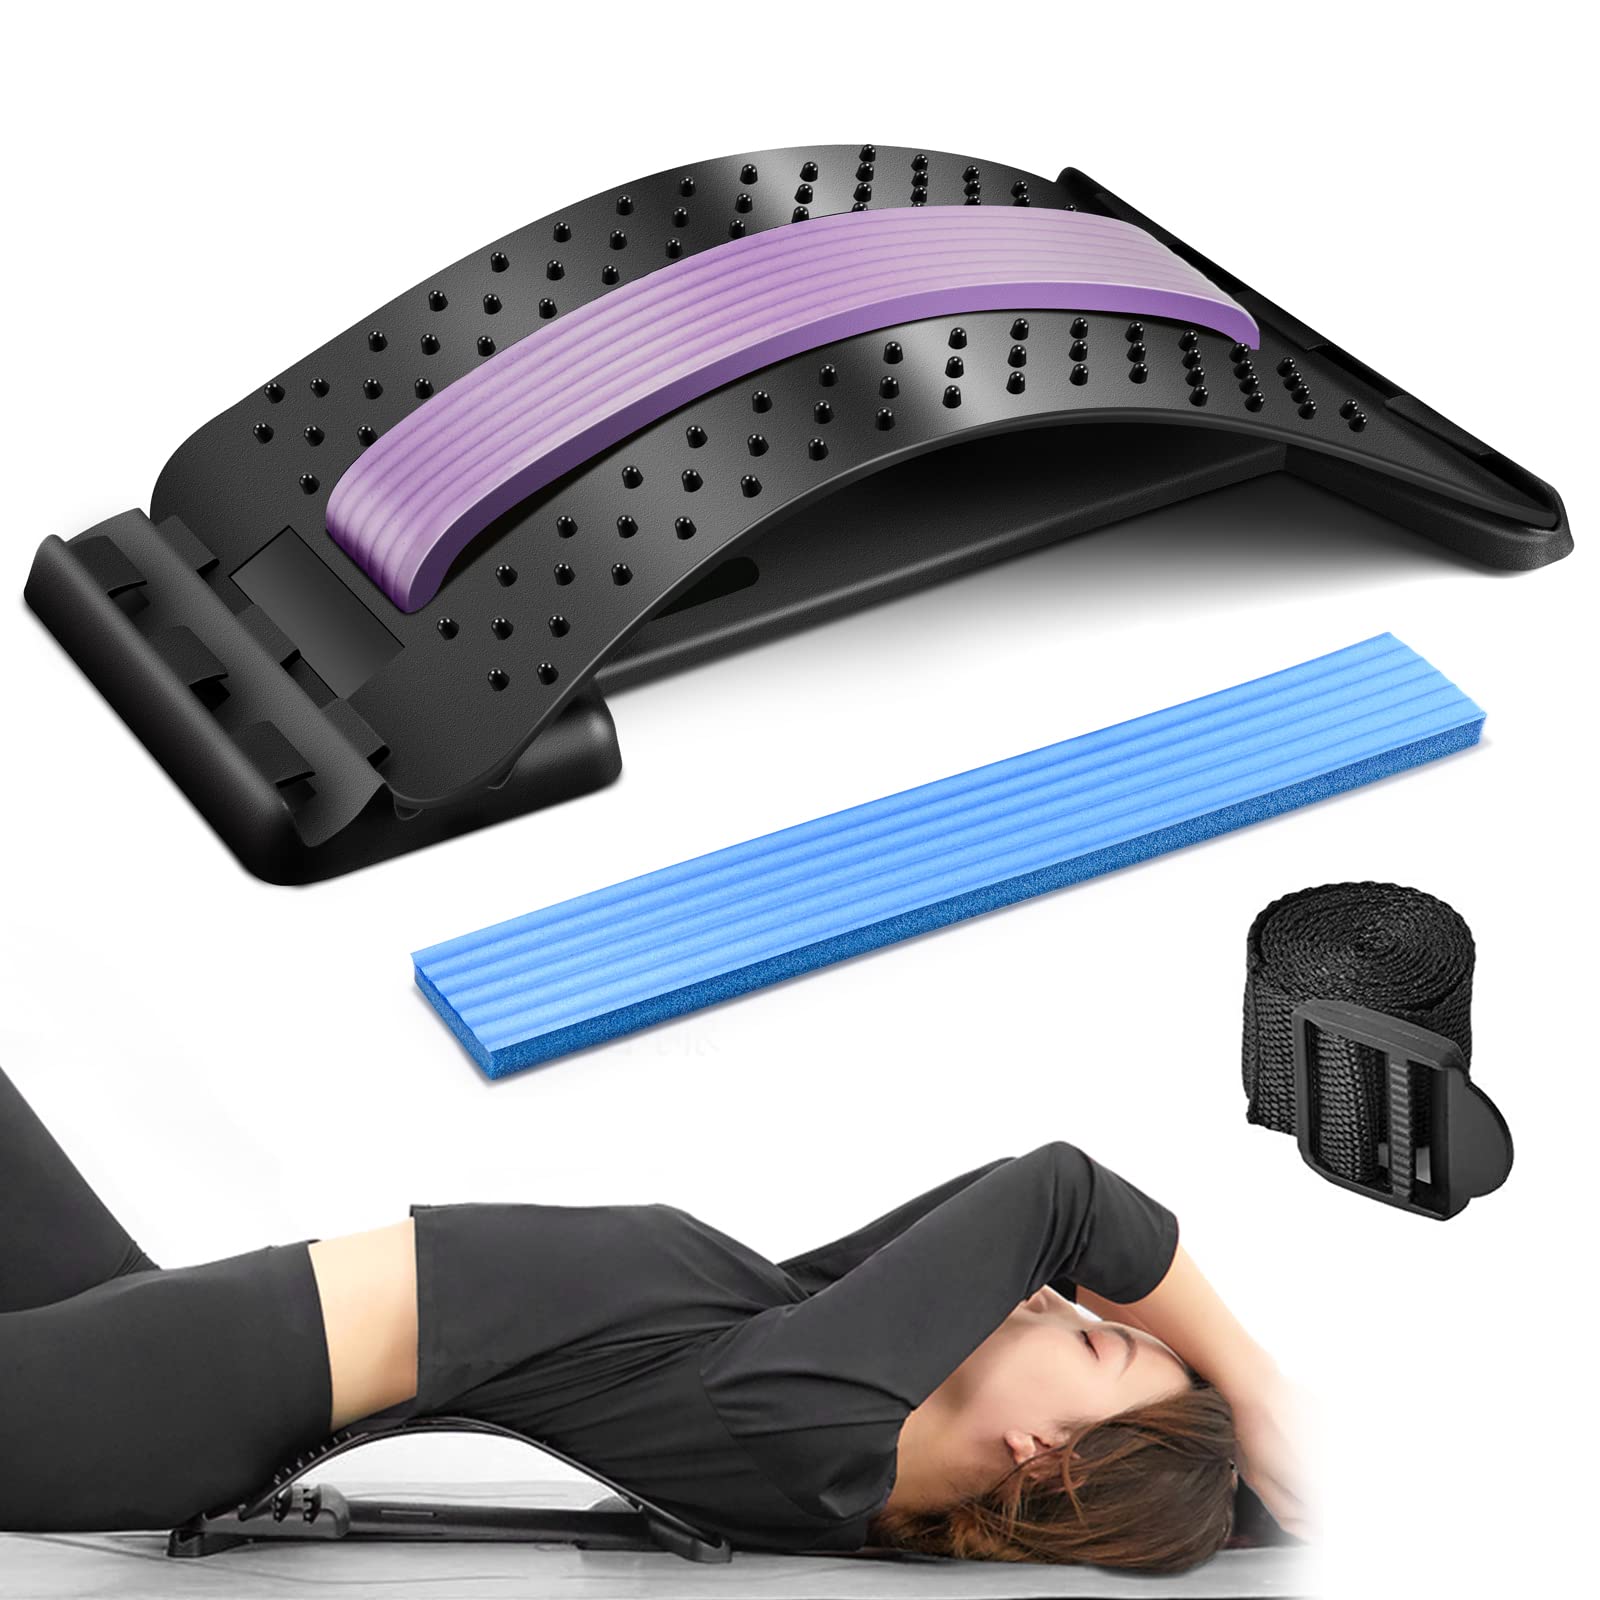 Back Stretching Device, Back Stretcher for Lower Back Pain Relief, 3-Level  Back Cracker Spine Deck - Black/Blue